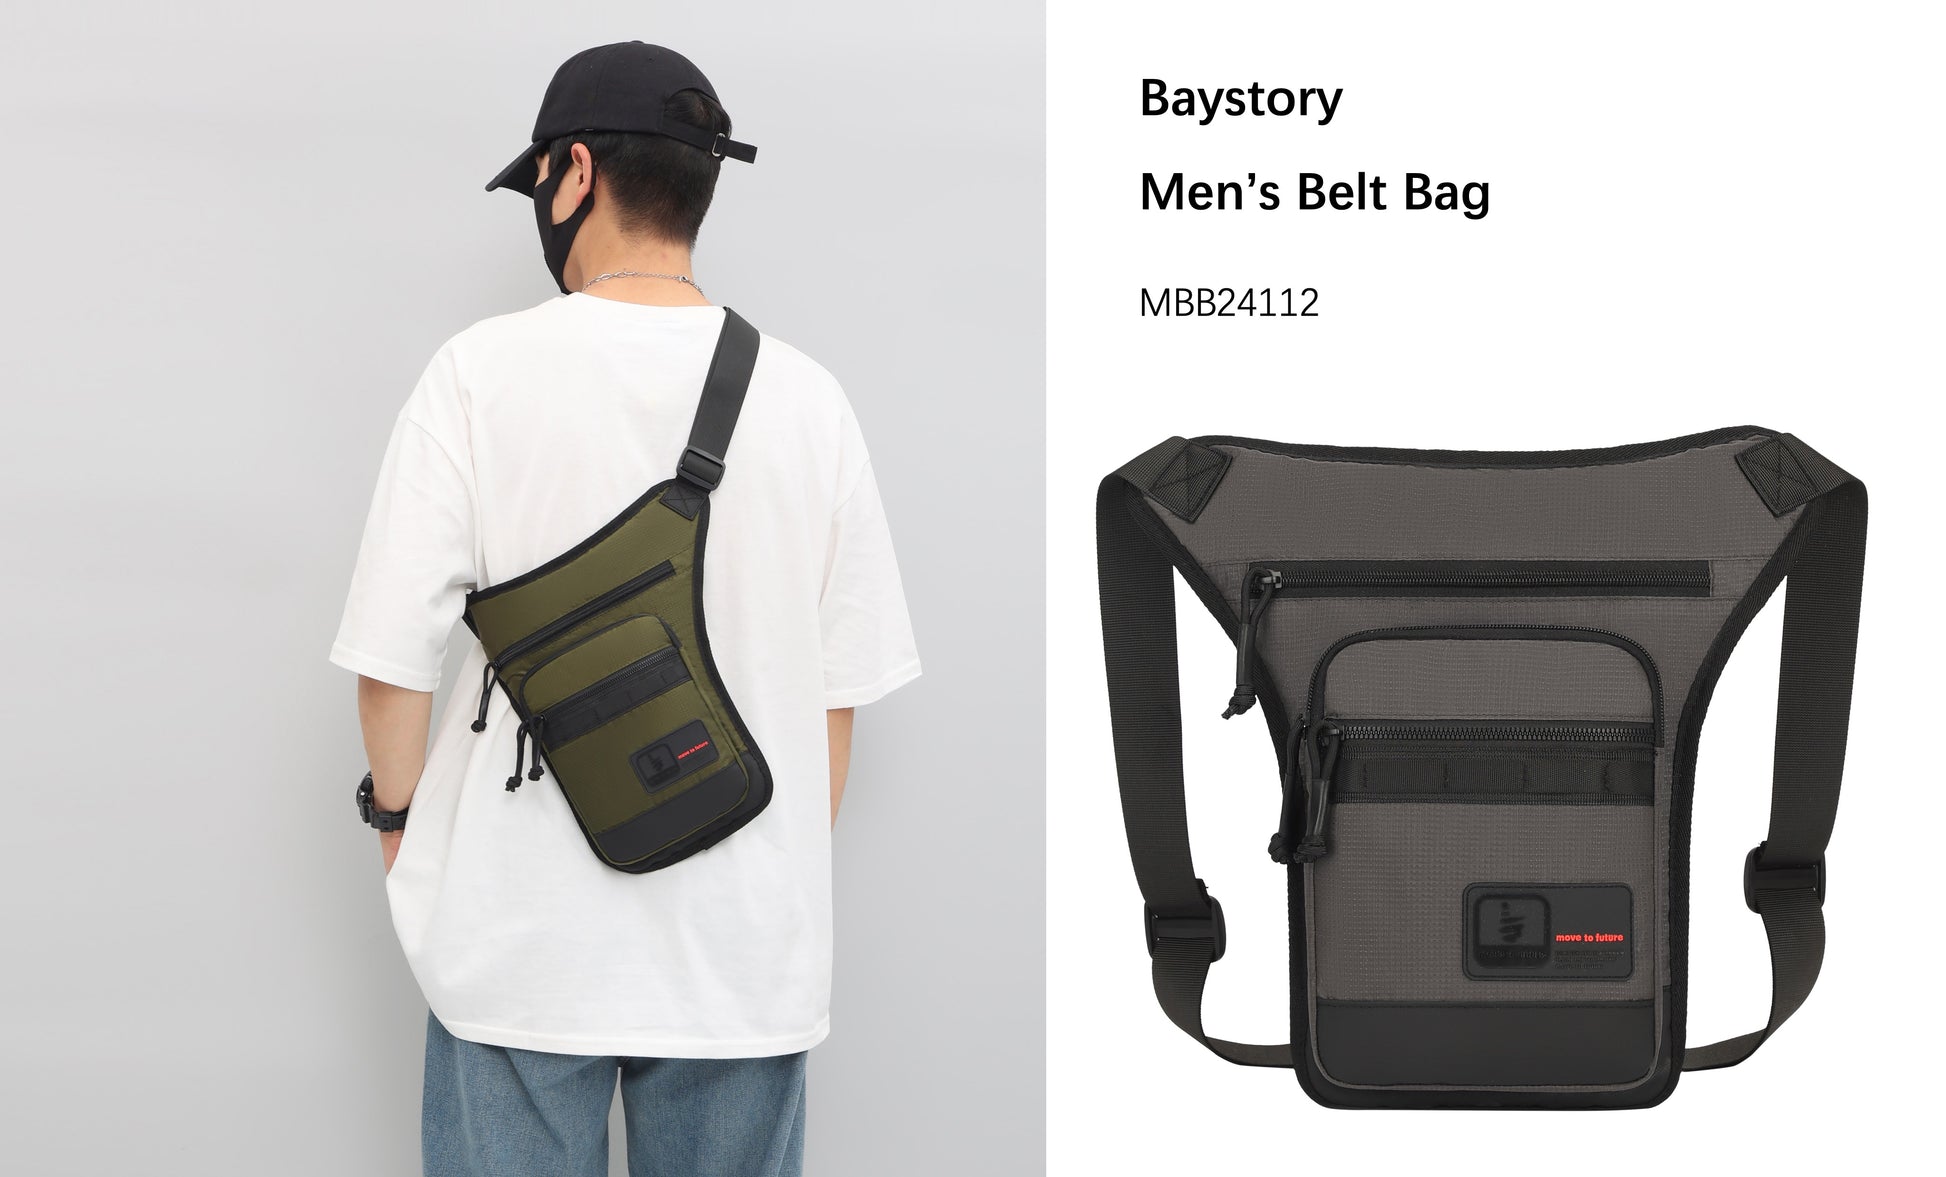 Baystory Men's Belt Bag MBB24112 - Baystory